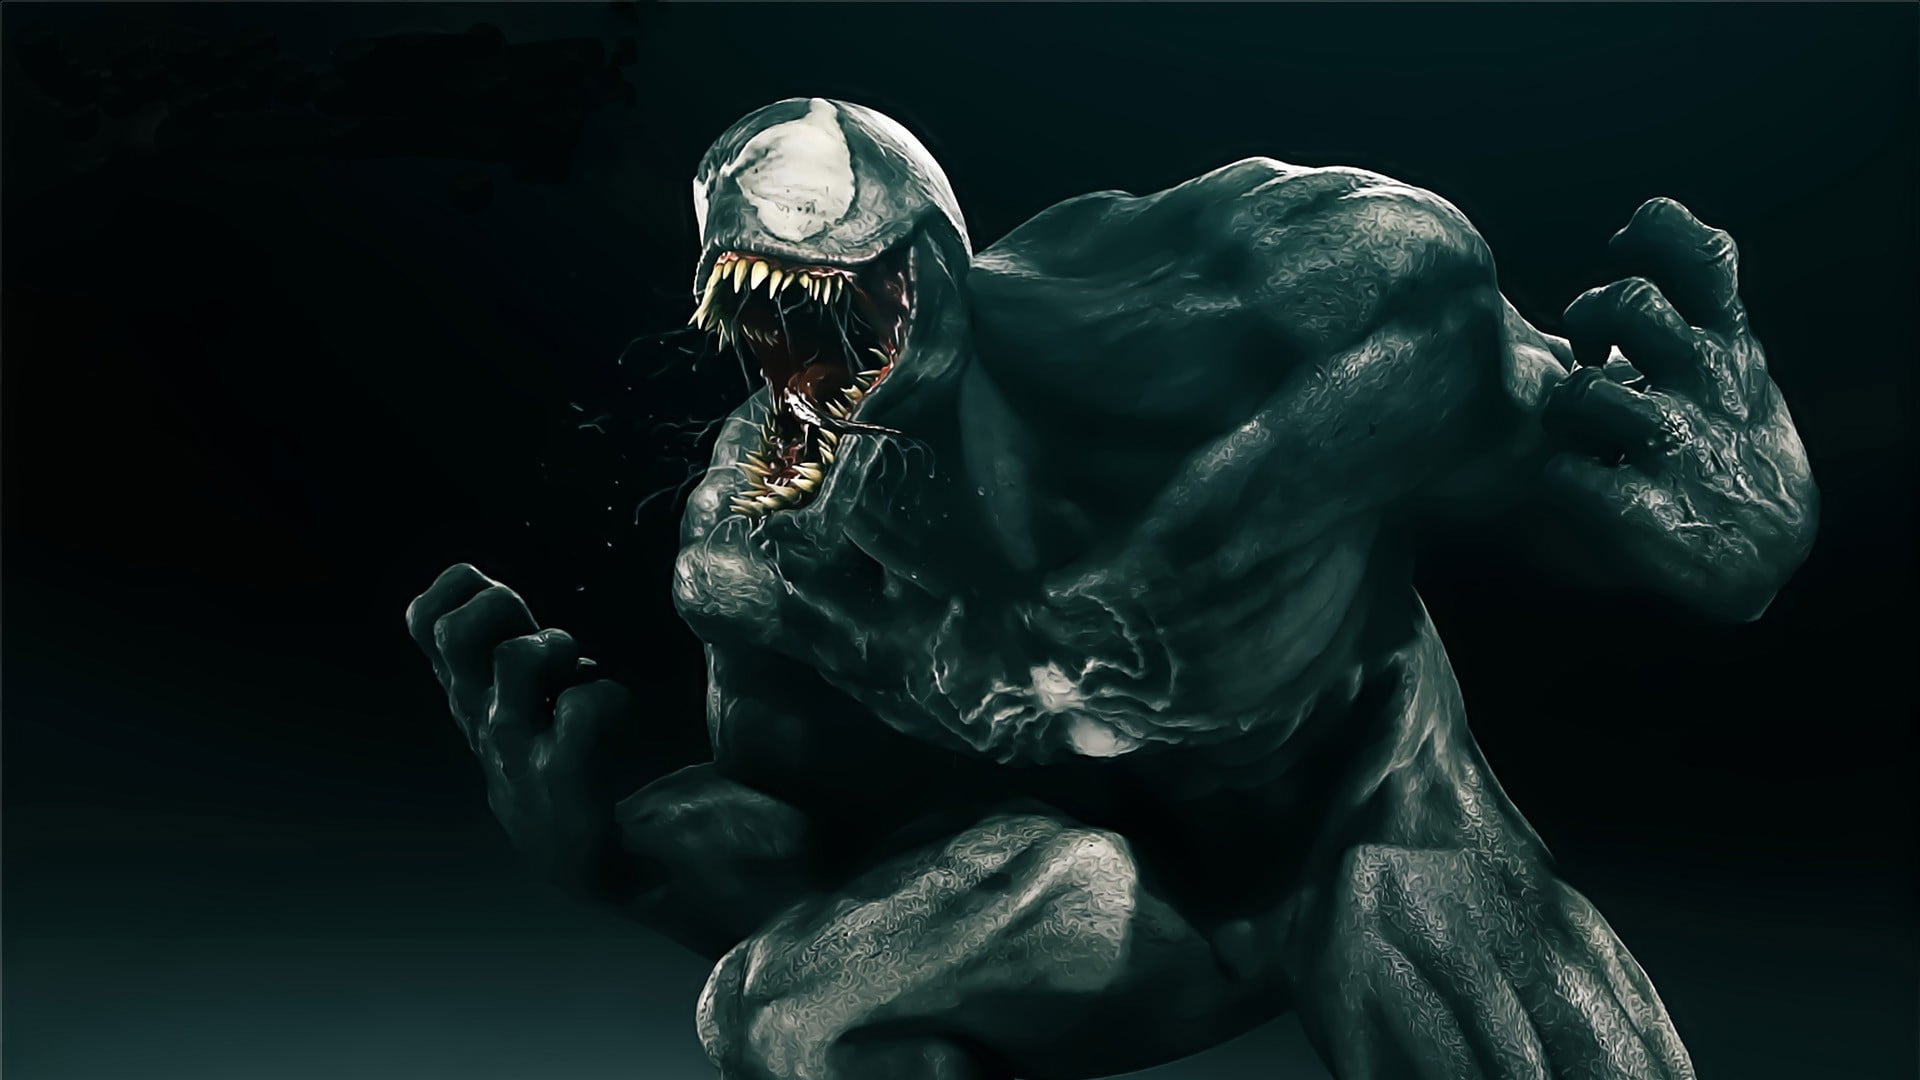 Spider-Man Venom poster, comics, one person, statue, sculpture